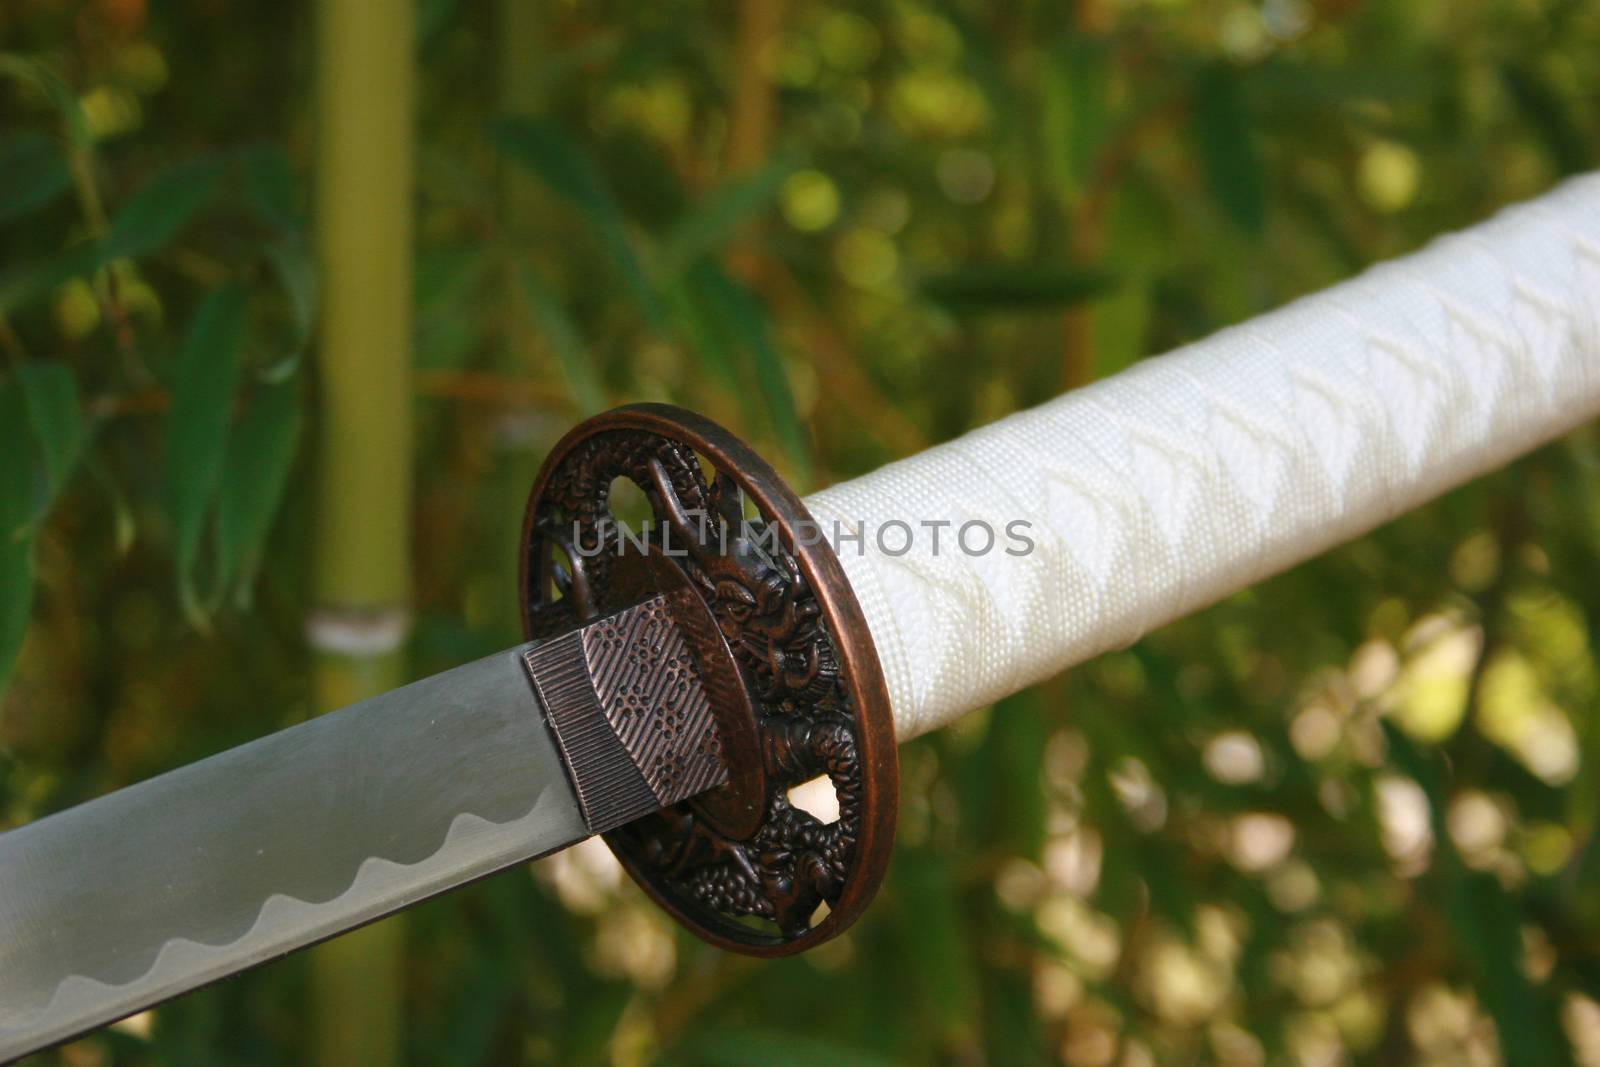 Katana Samurai Sword With Bamboo Forest Background.